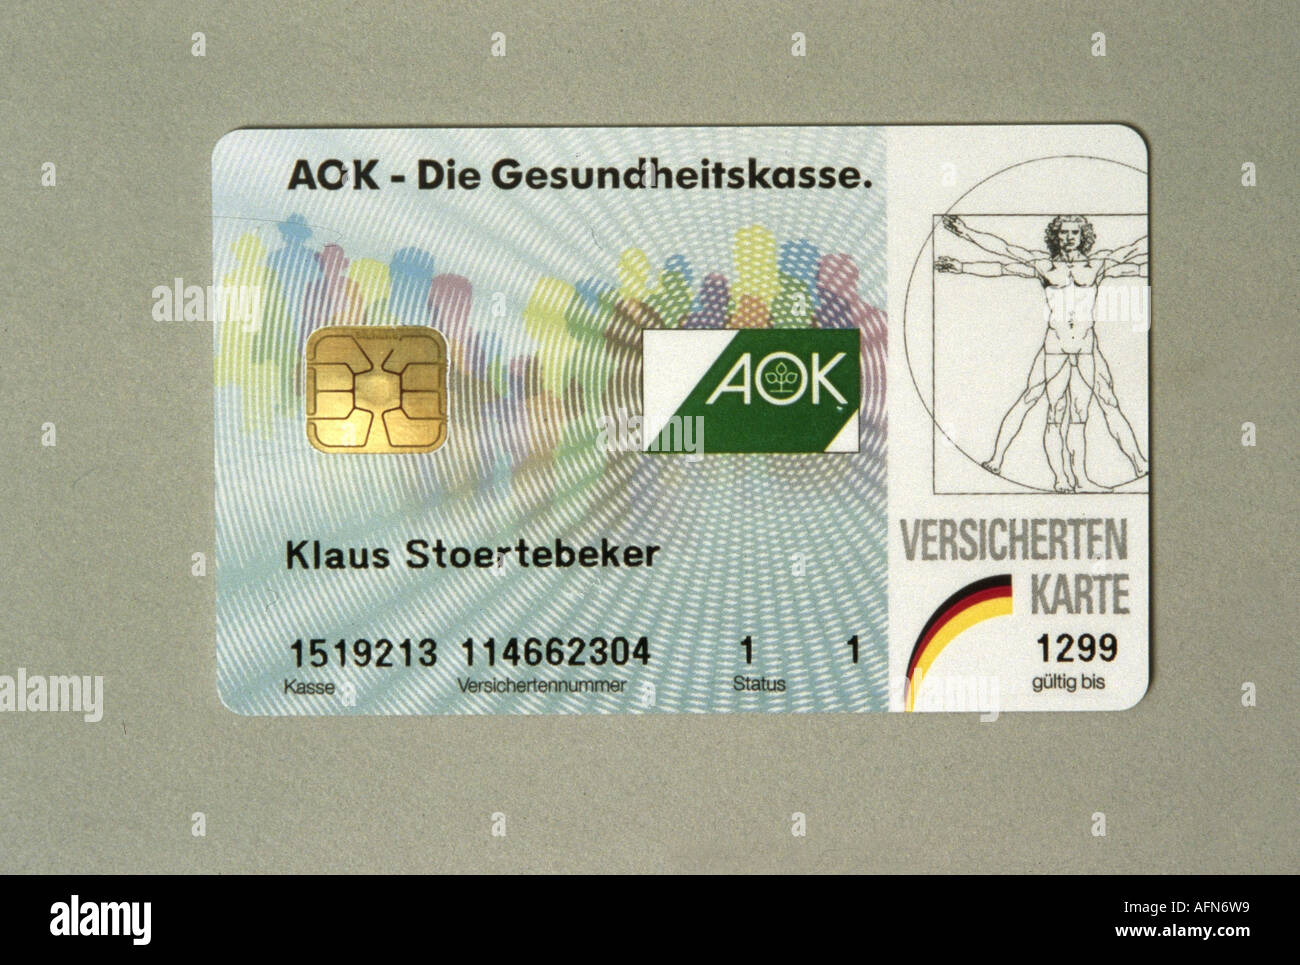 Medicine Health Insurance Card For Insurants Aok Insurance Company Germany 1990s 90s Chip Card Leonardo Da Vinci Vitr Stock Photo Alamy